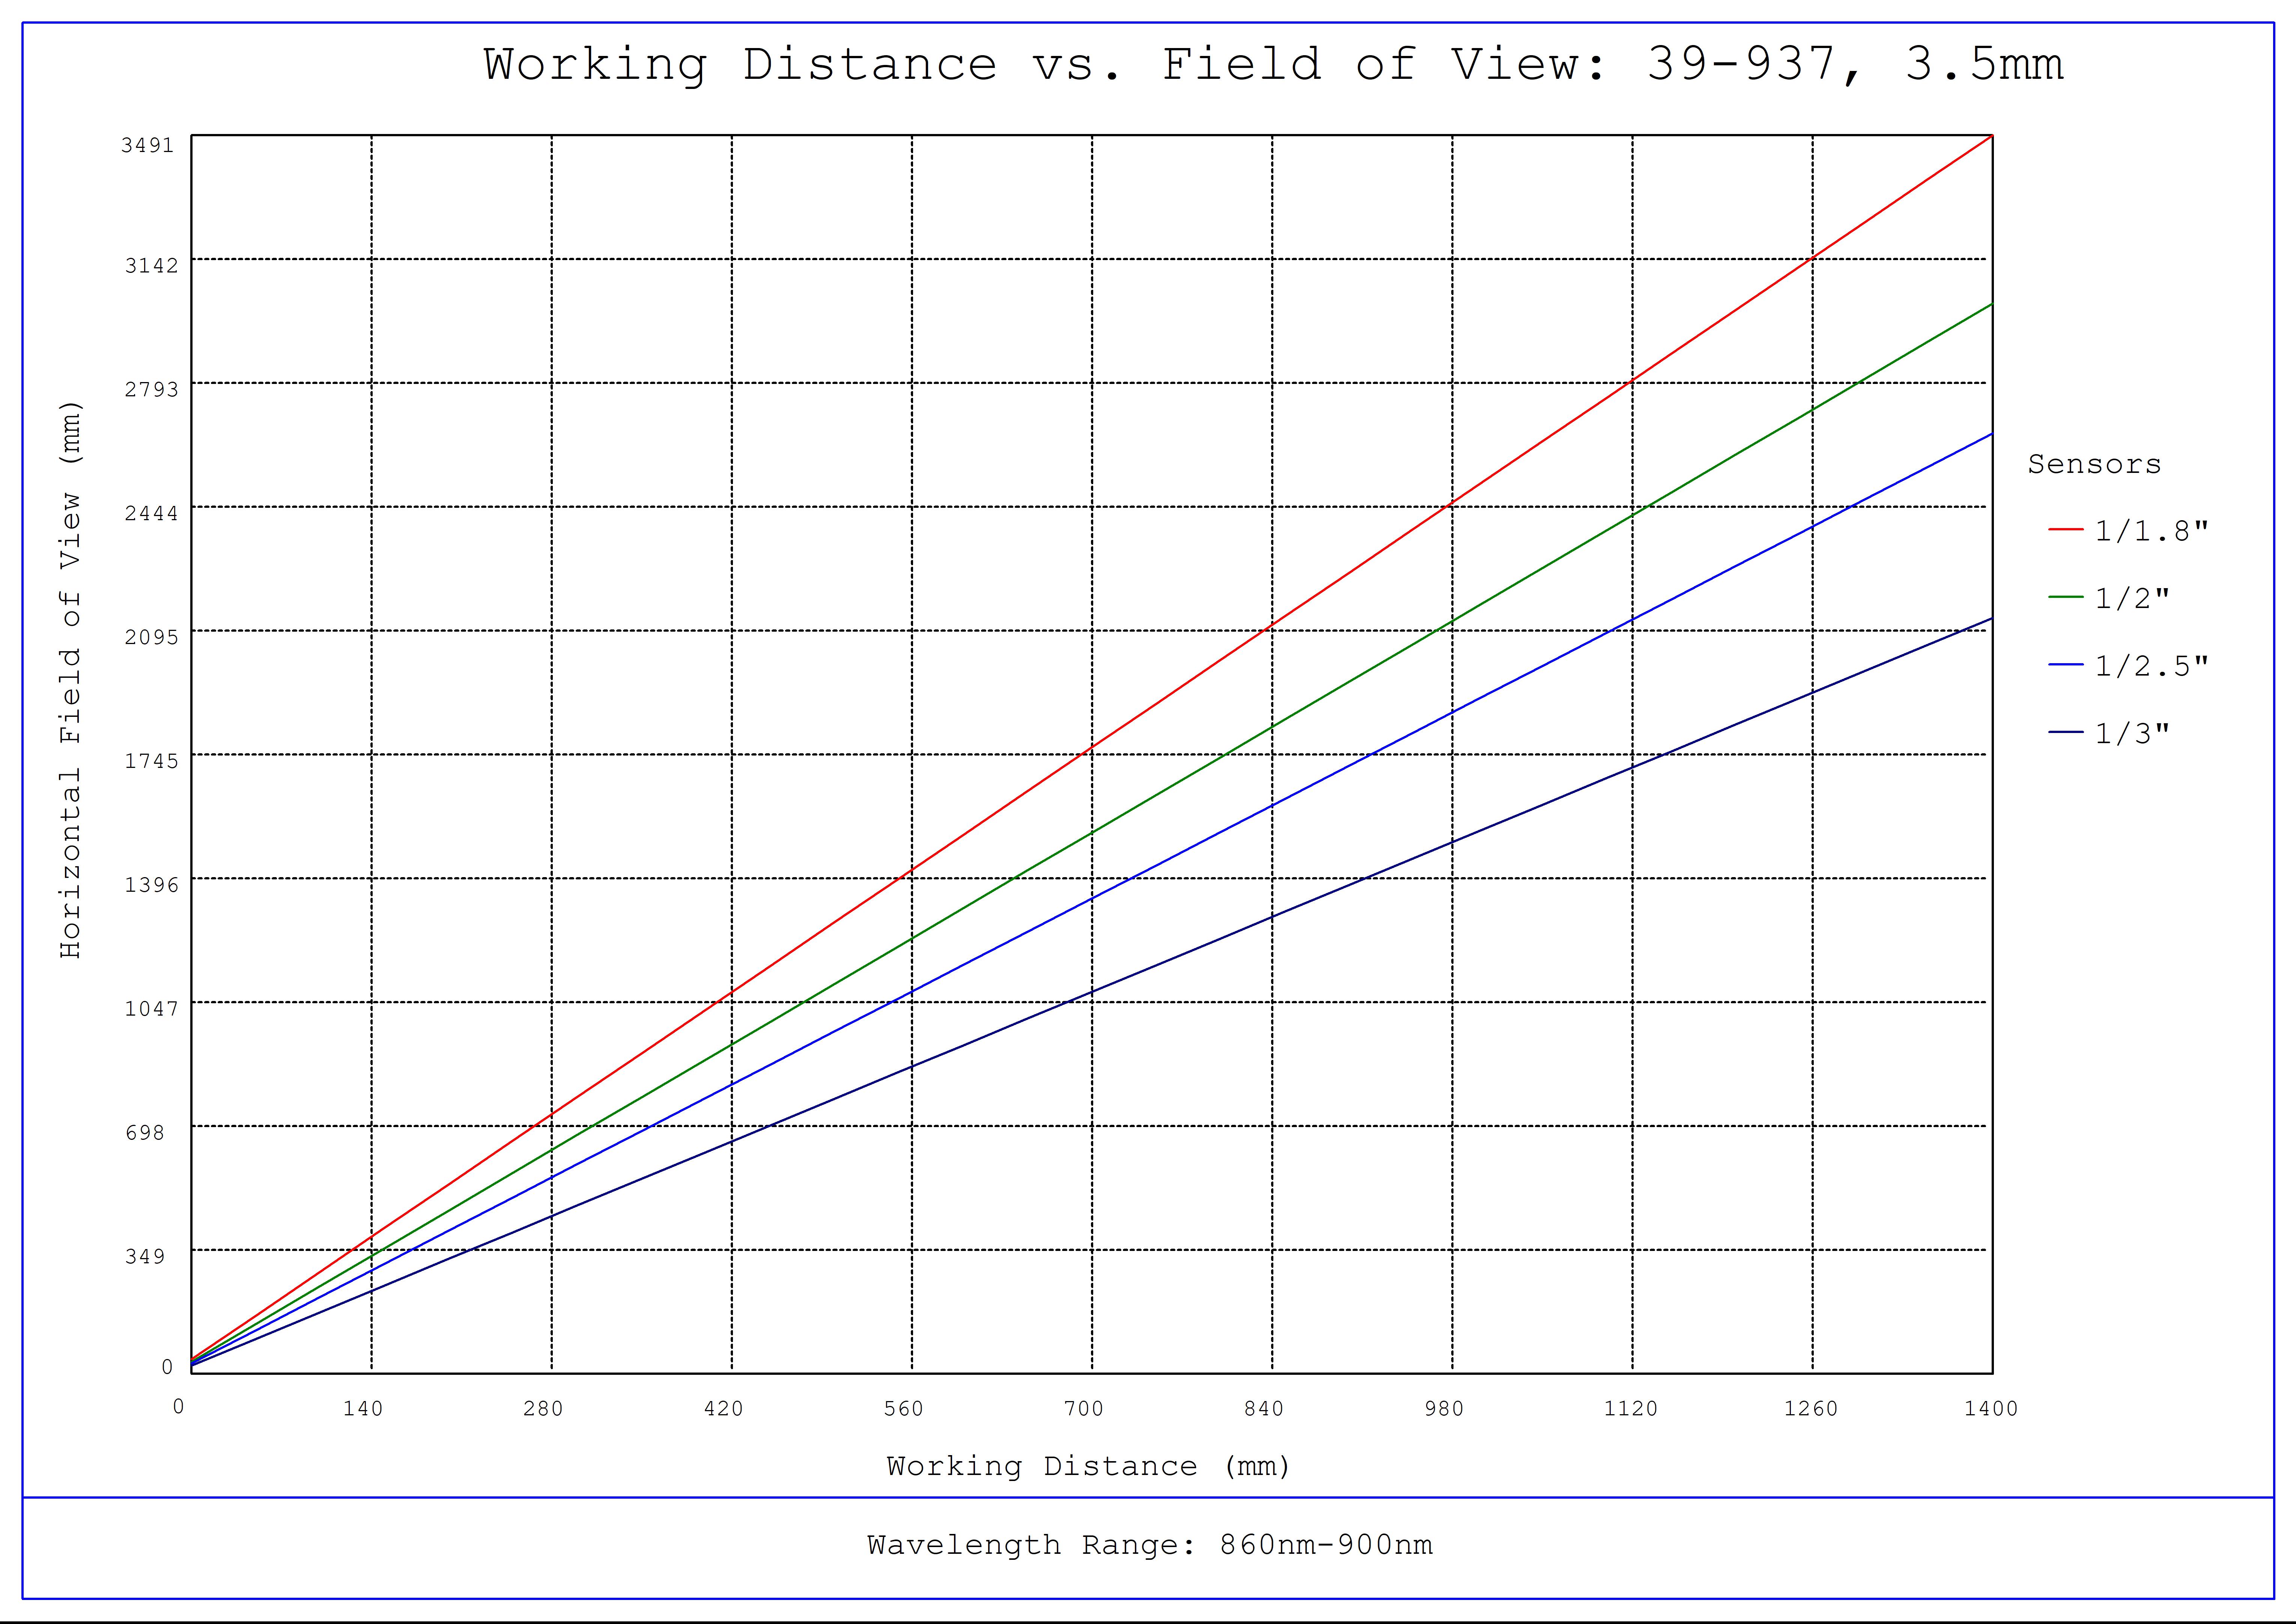 #39-937, 3.5mm C VIS-NIR Series Fixed Focal Length Lens, Working Distance versus Field of View Plot